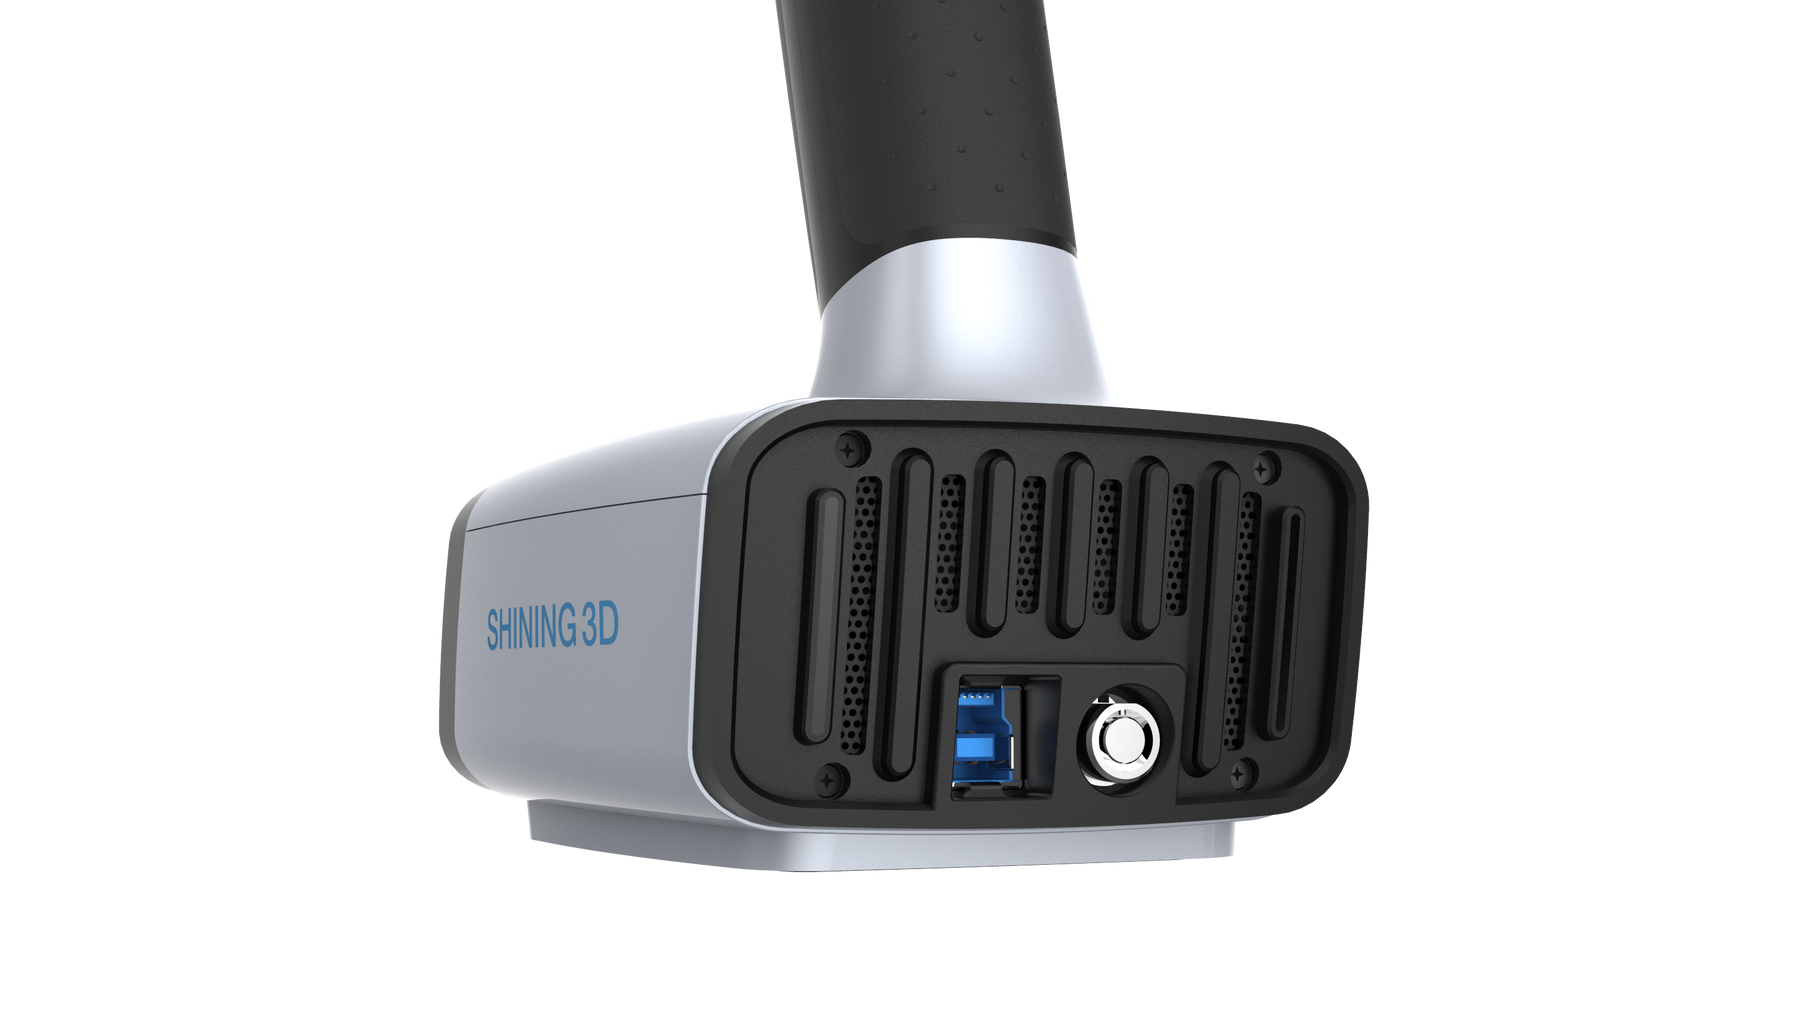 Einscan HX Hybrid Blue Laser & LED Handheld 3D Scanner